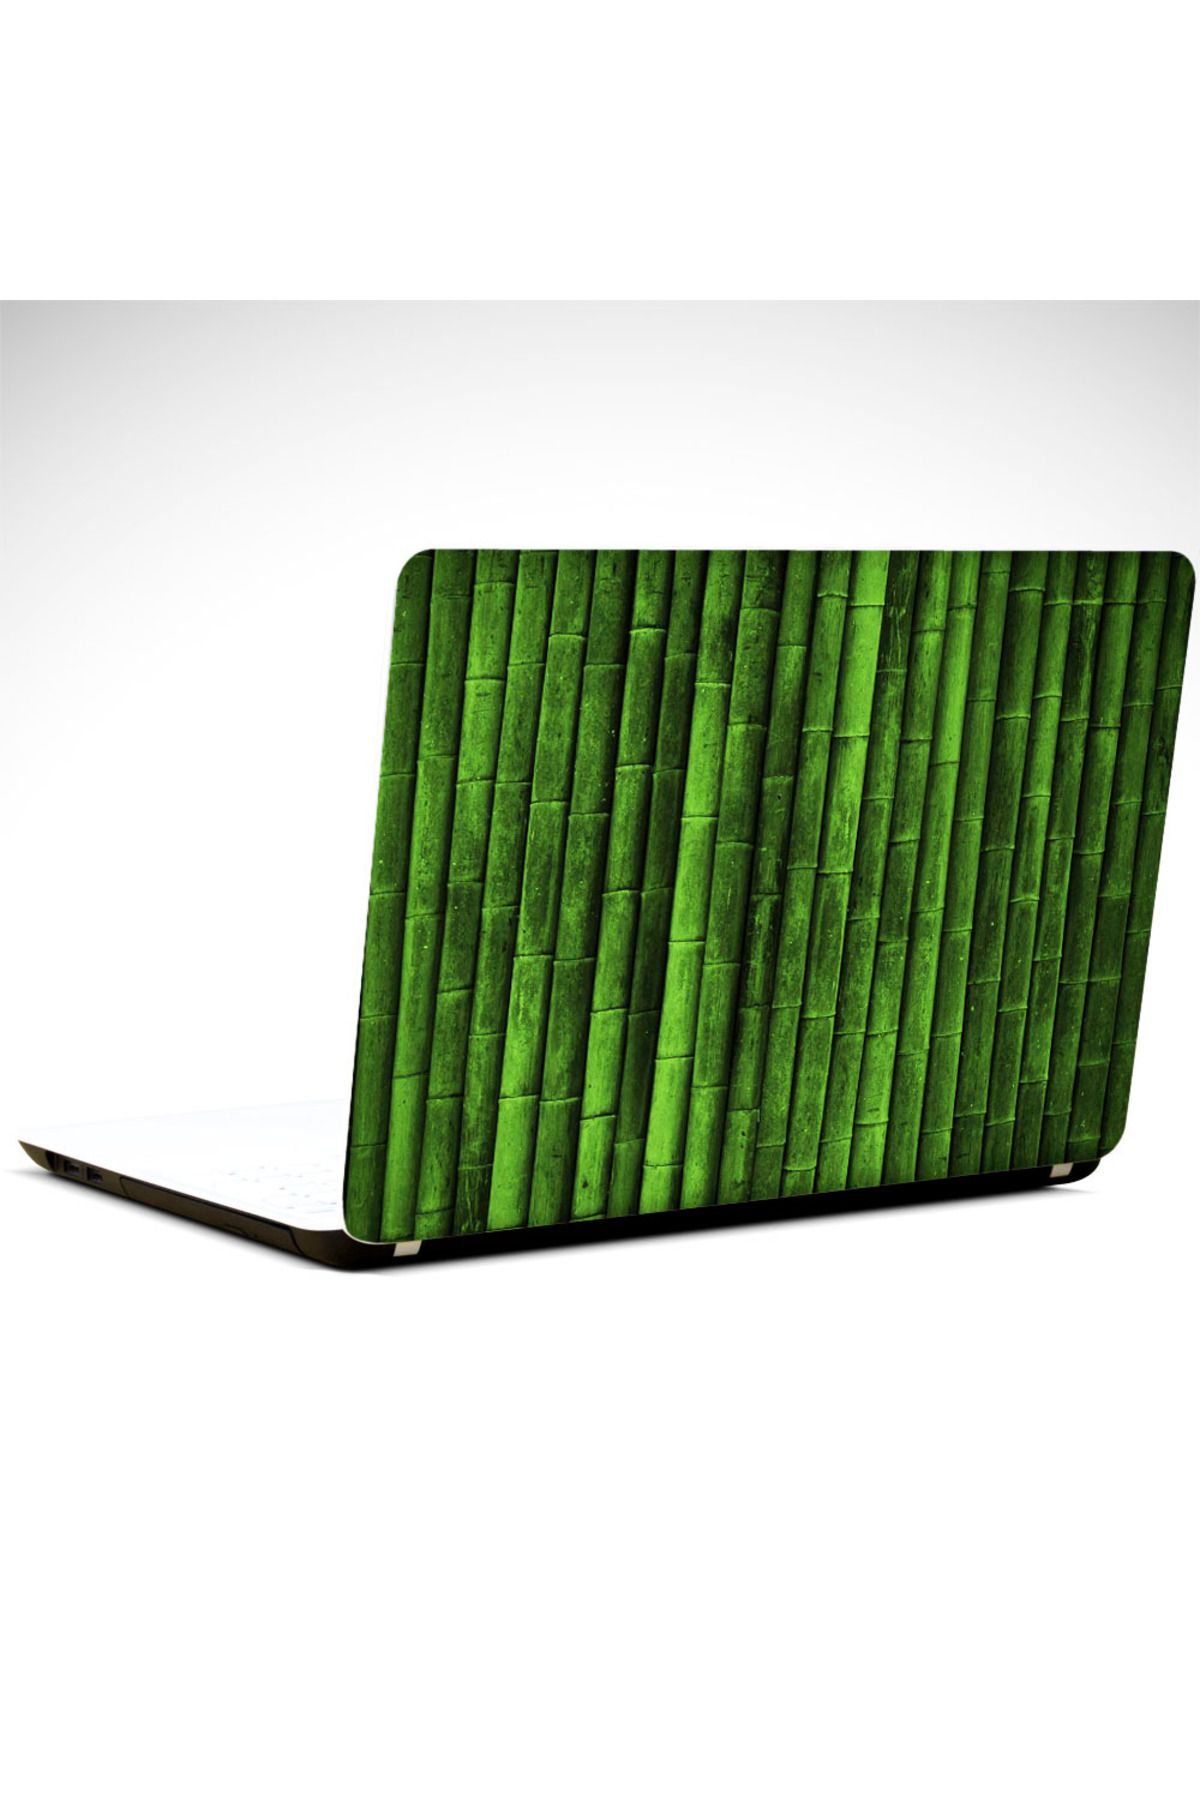 artefoni Bambular Laptop Notebook Tablet Sticker Ölçü 19 İnch (40,5X27CM)